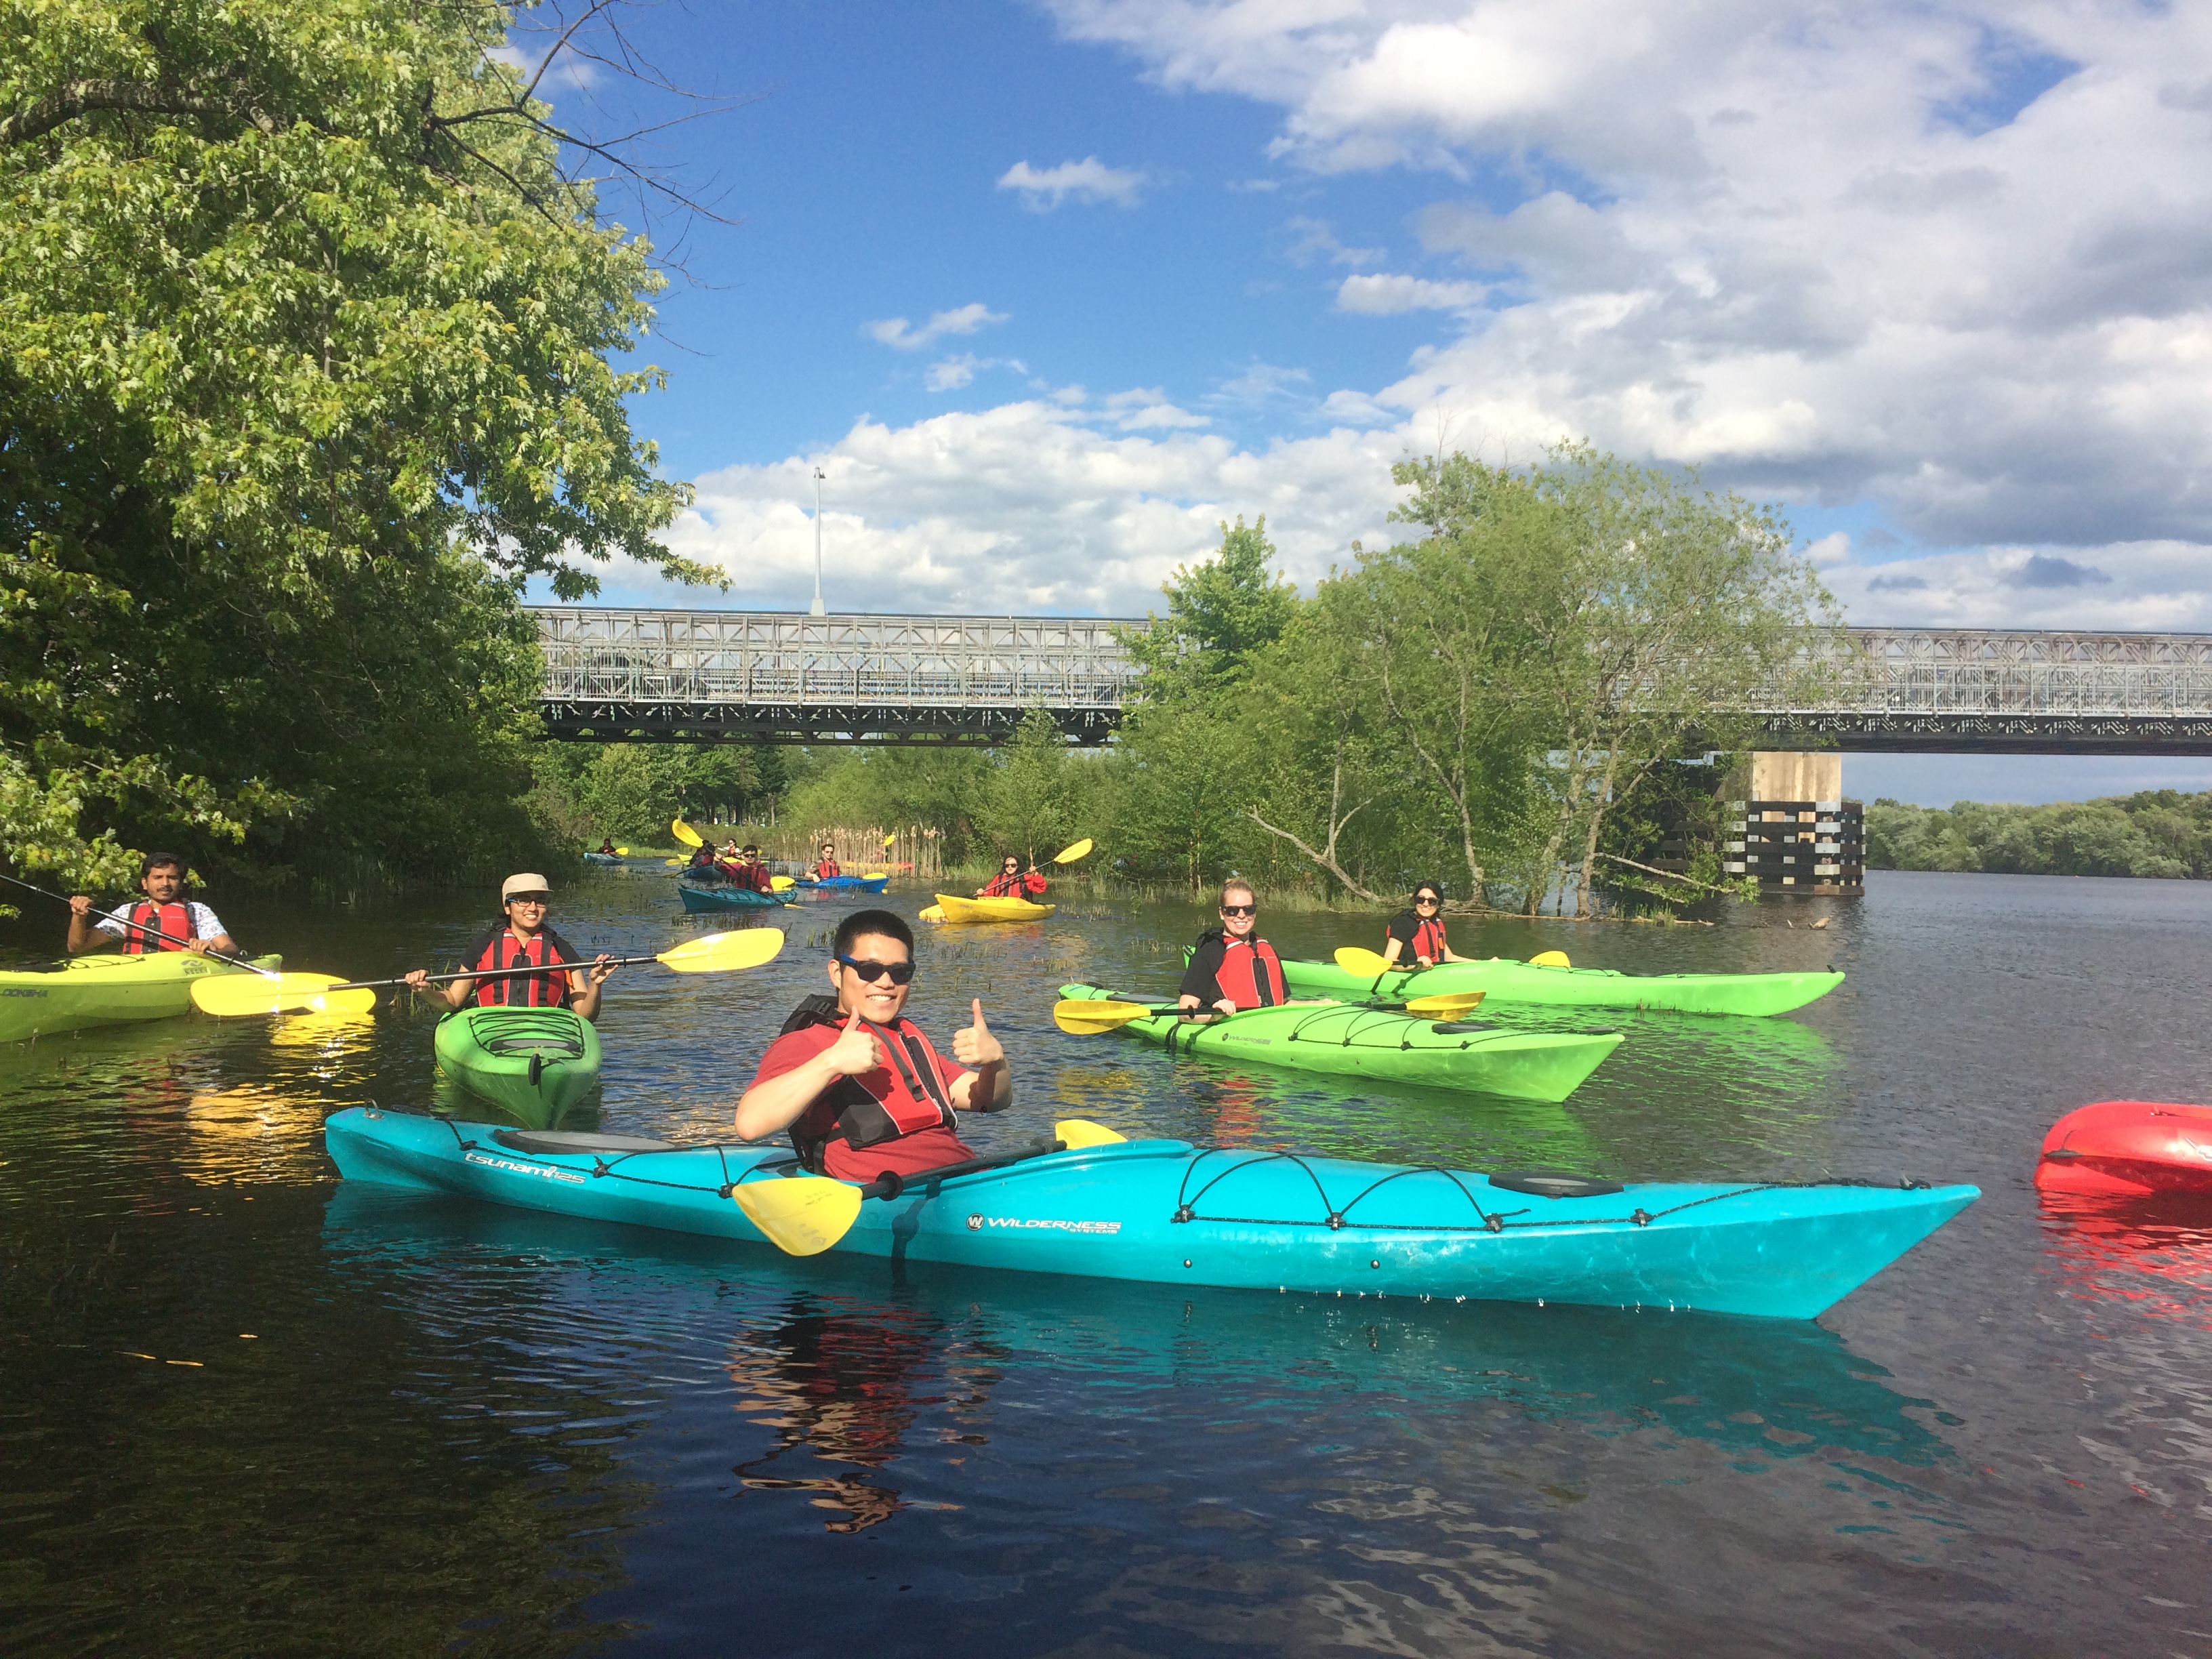 Students kayaking on Merrimack River.